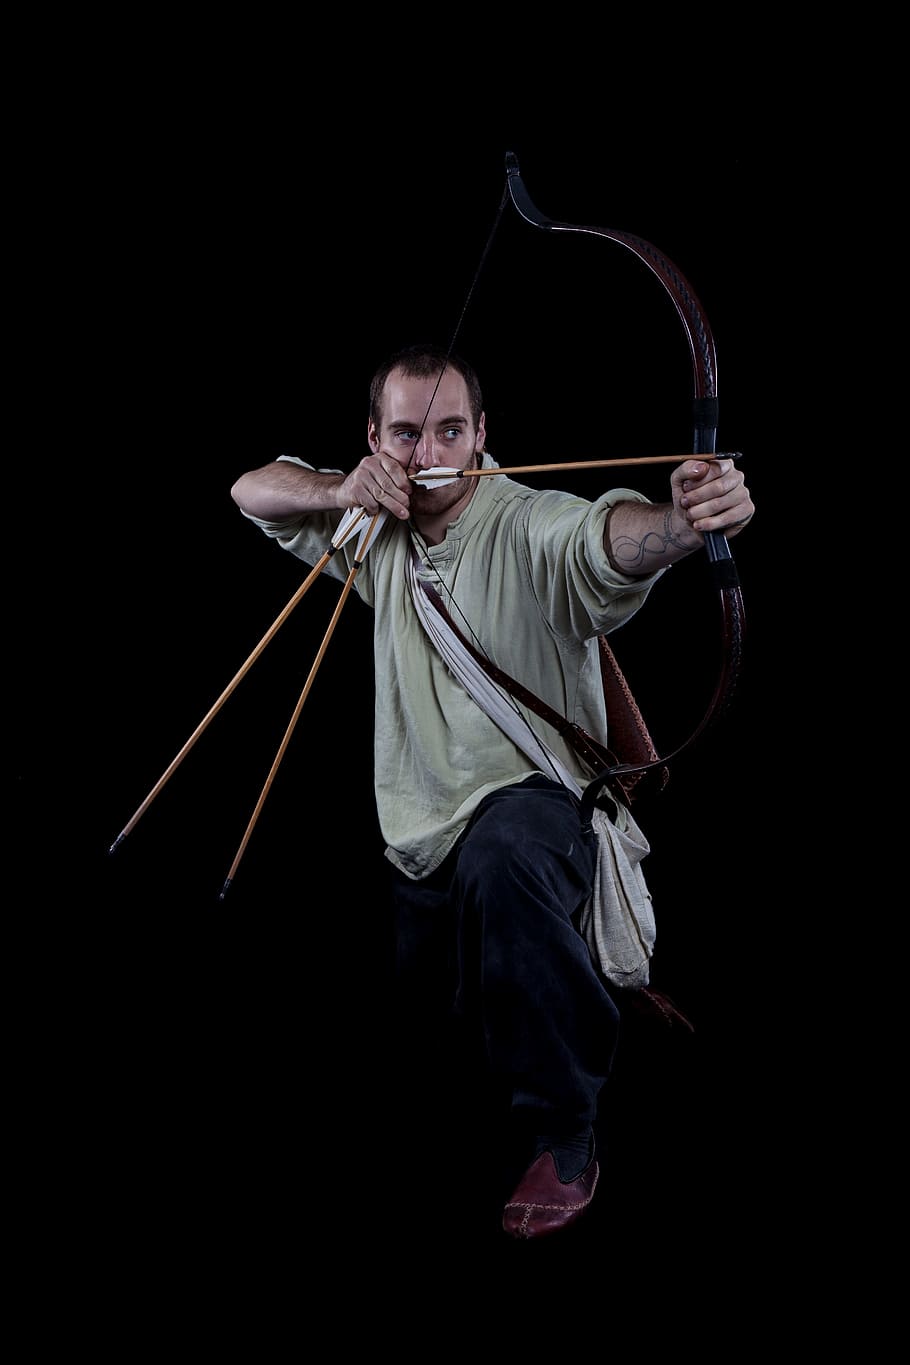 man, focusing, target, using, composite, bow, human, viking, archer, medieval